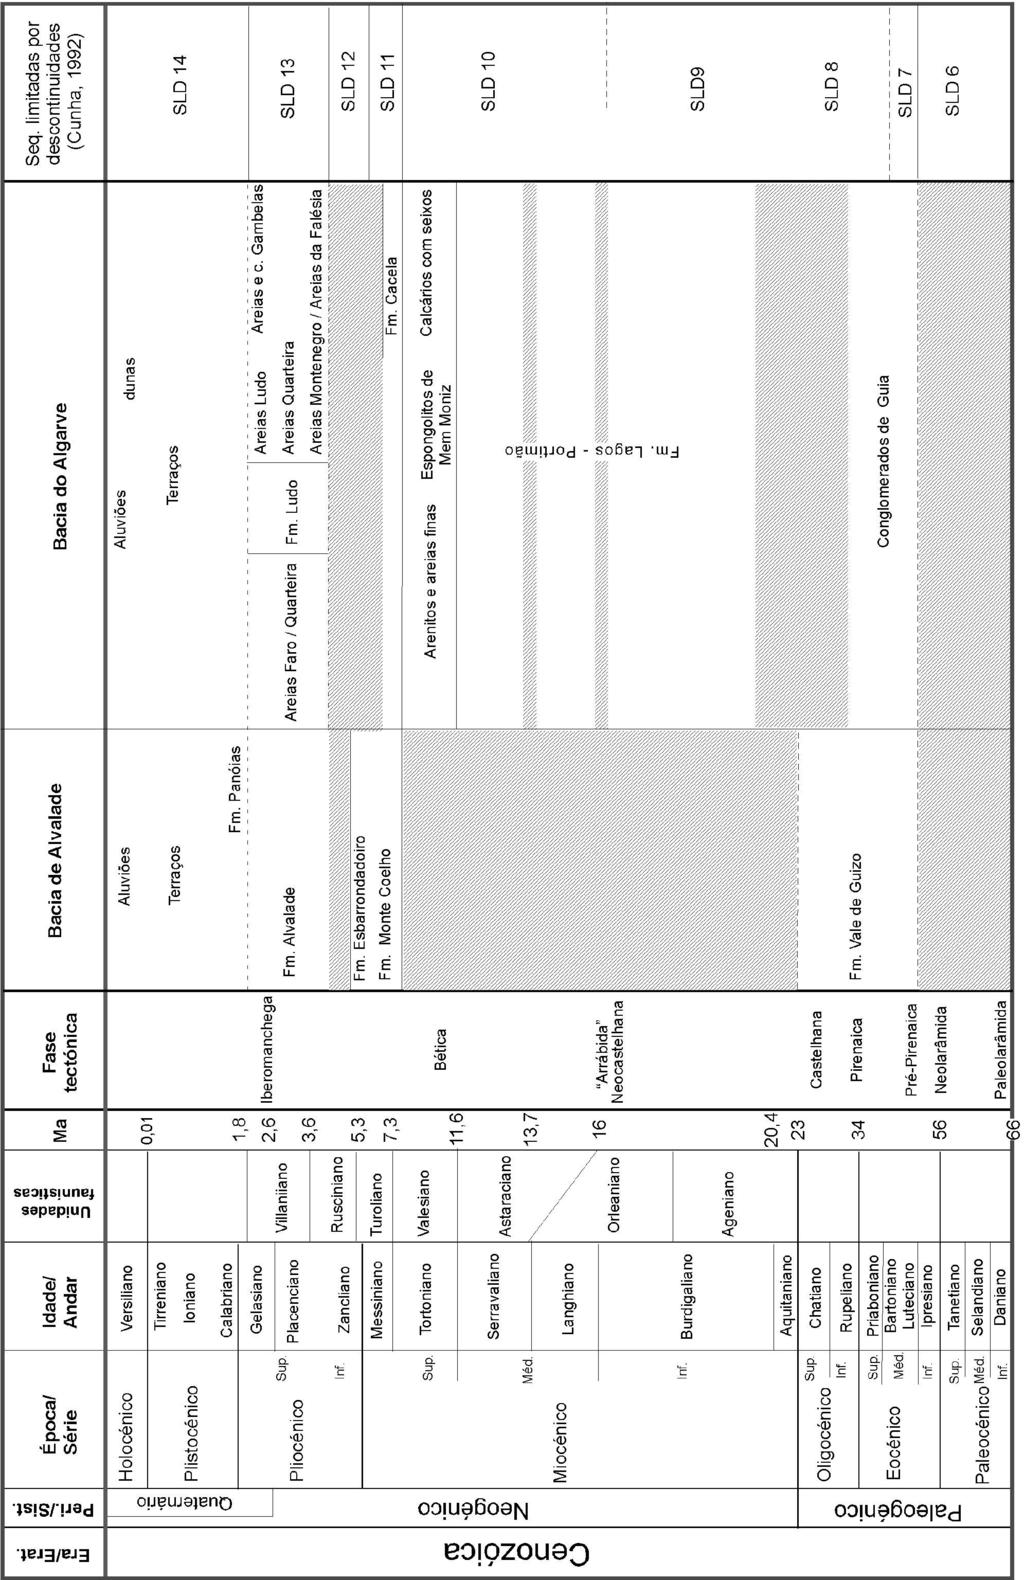 370 Volume I, Capítulo III - Paleontologia e Estratigrafia Tabela 3